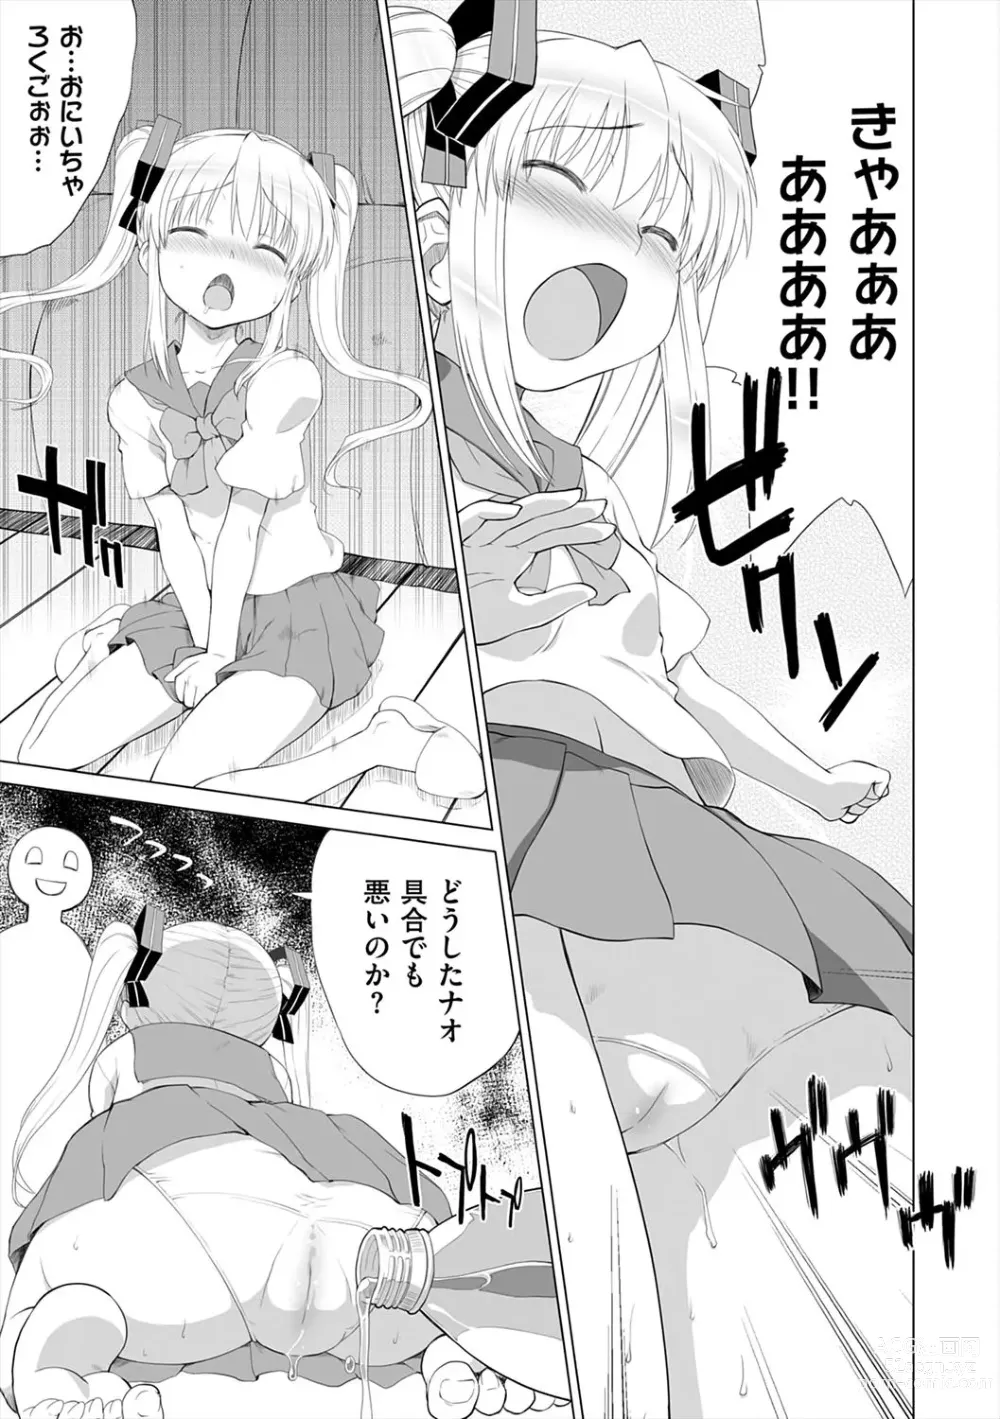 Page 187 of manga Marble Girls